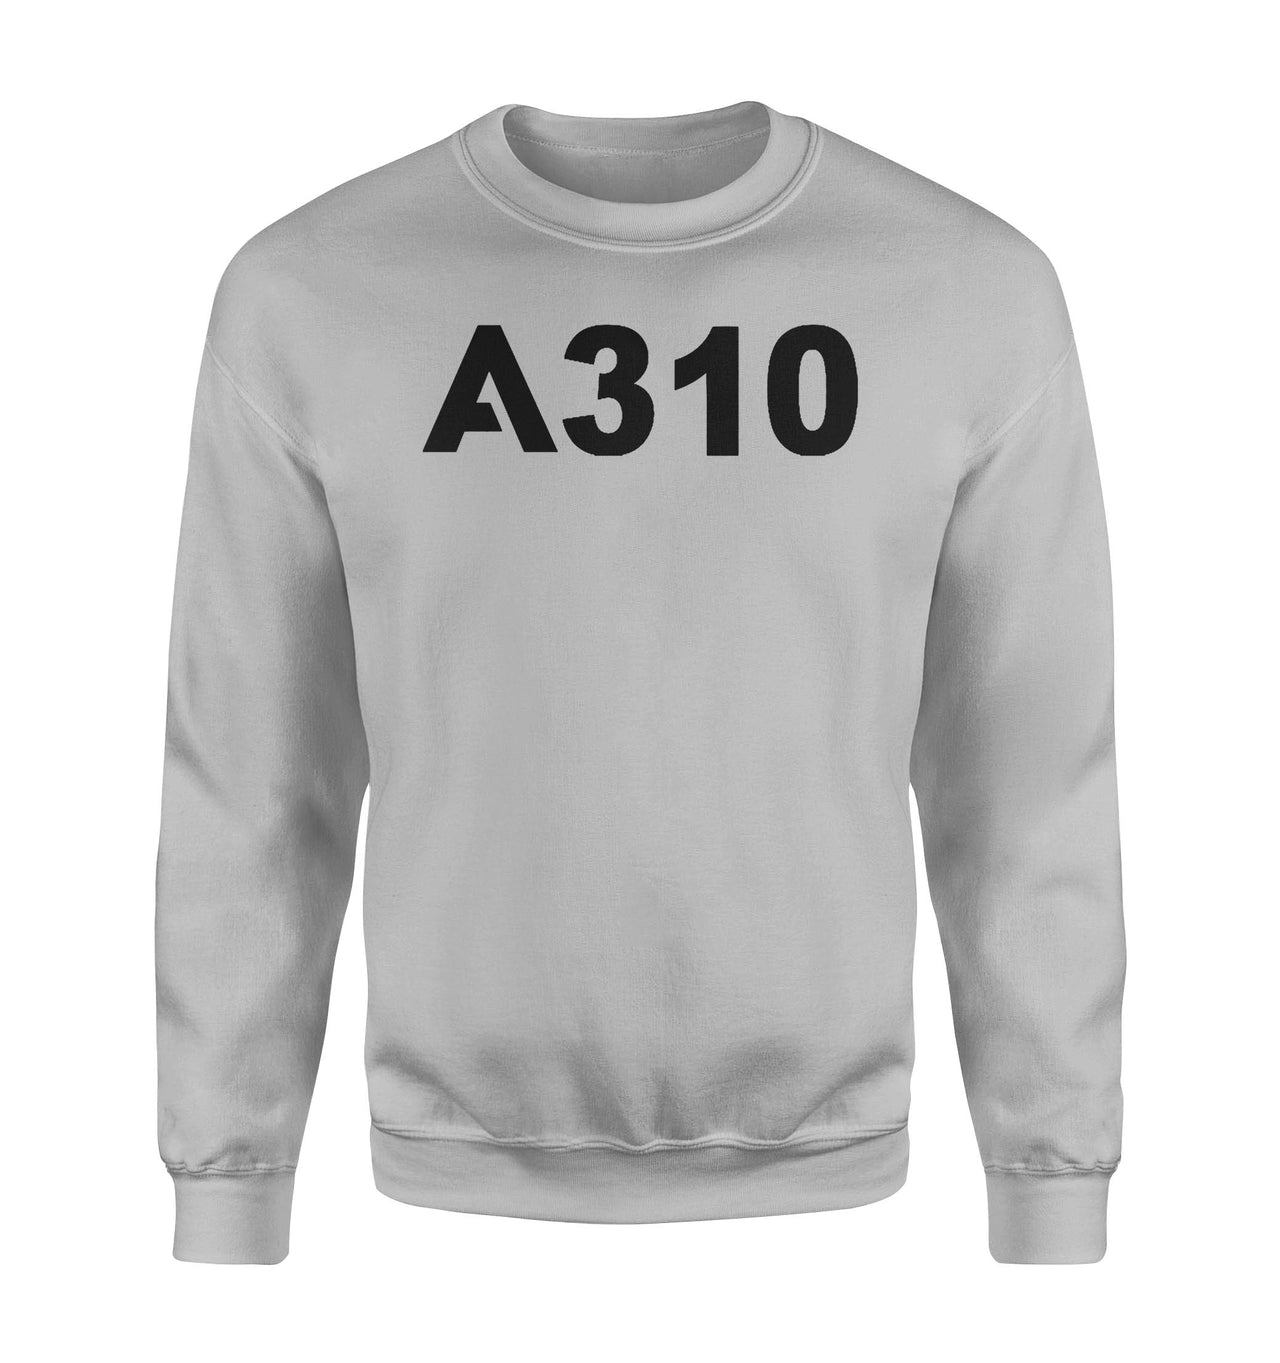 A310 Flat Text Designed Sweatshirts